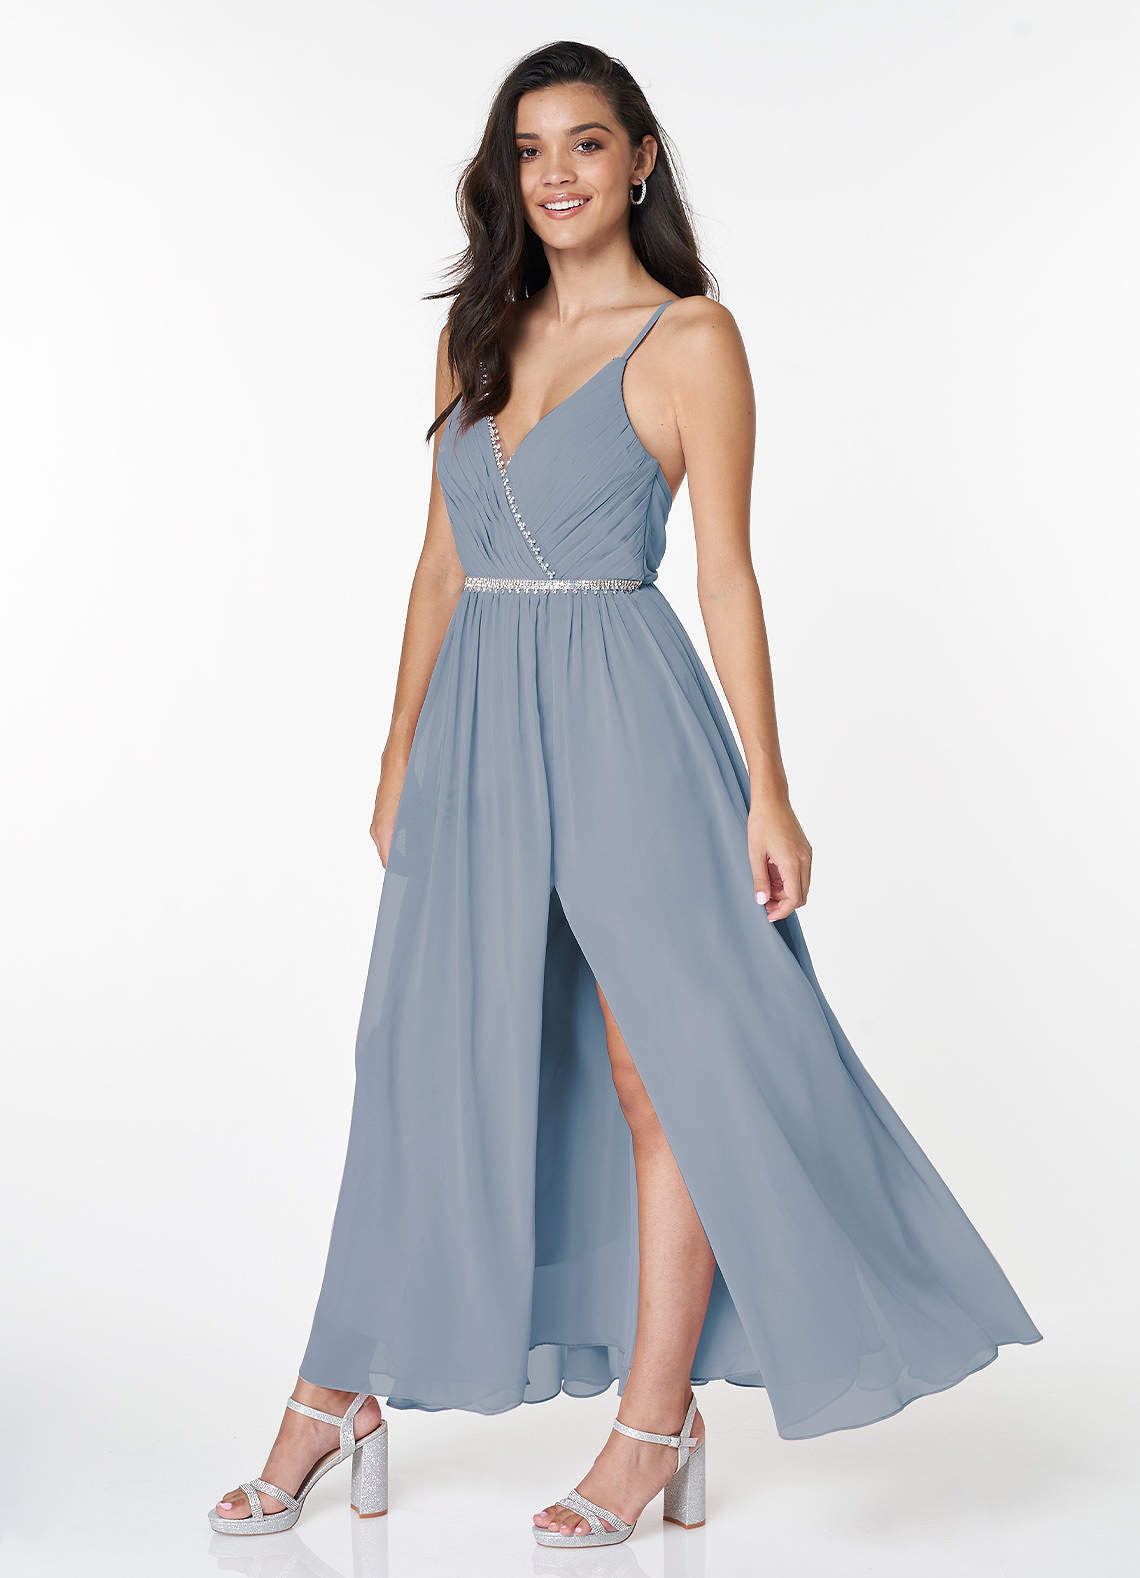 Avondale Power Blue Maxi Dress image1